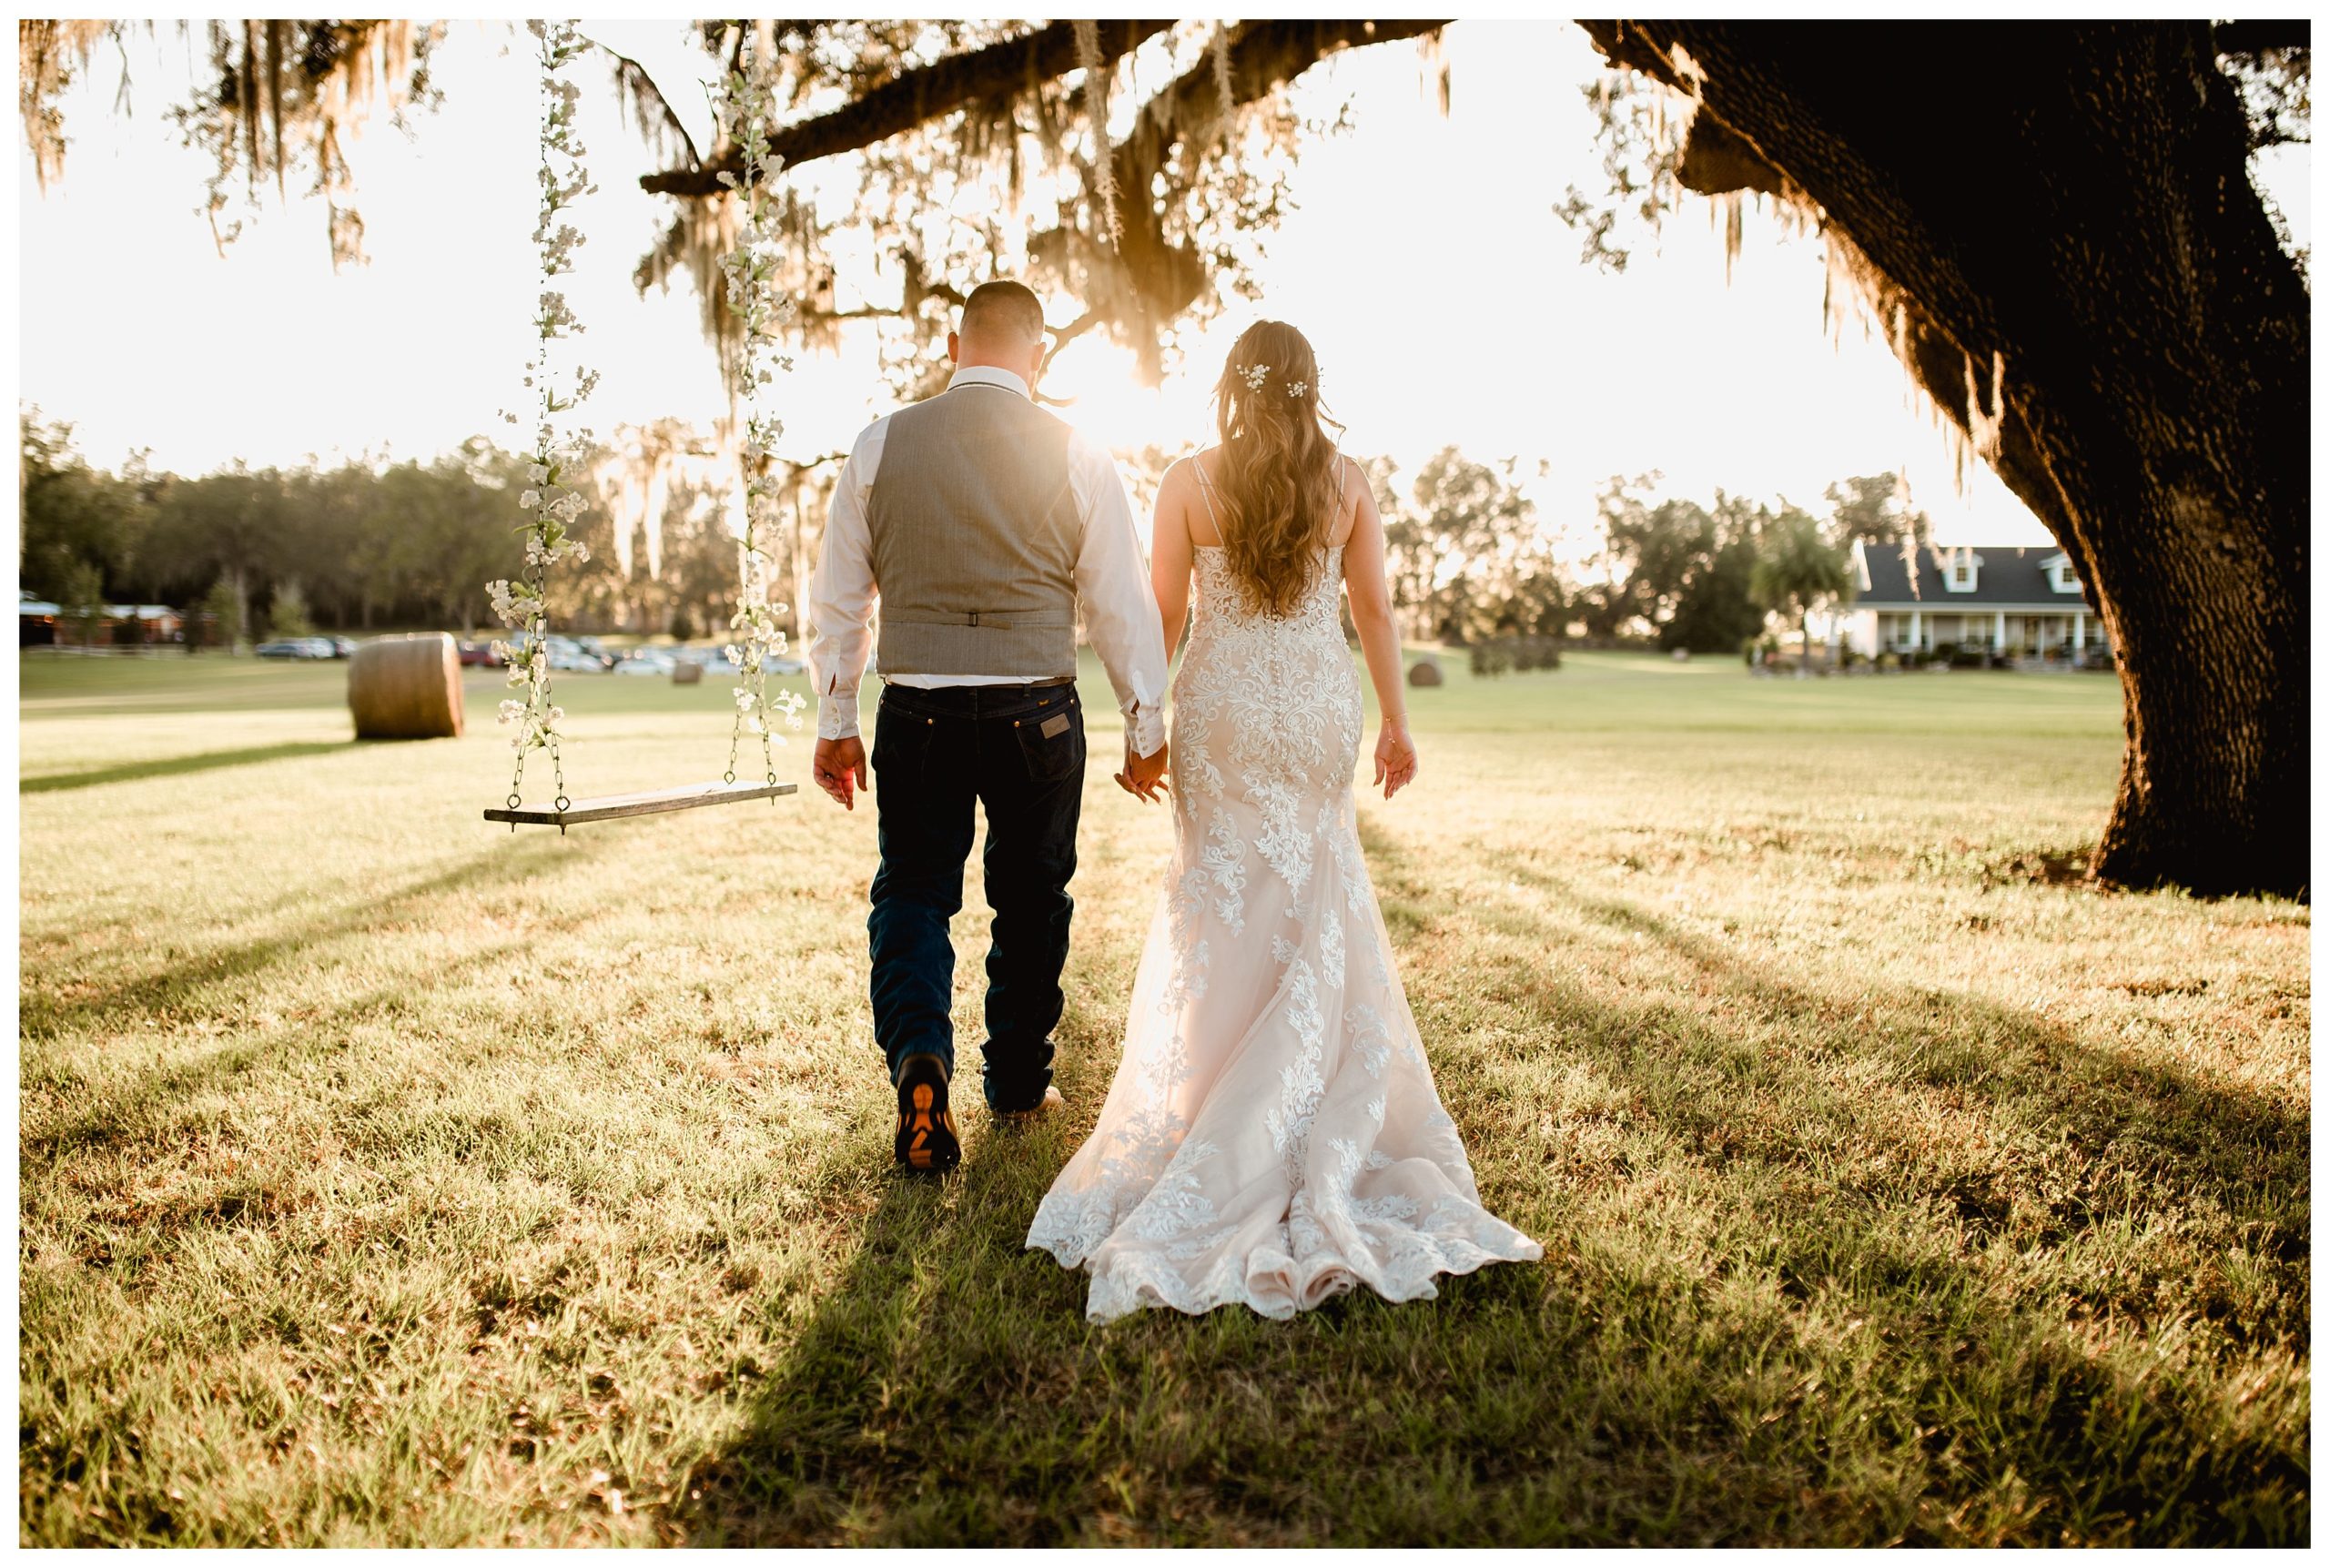 Wedding portrait photography favorites in Florida